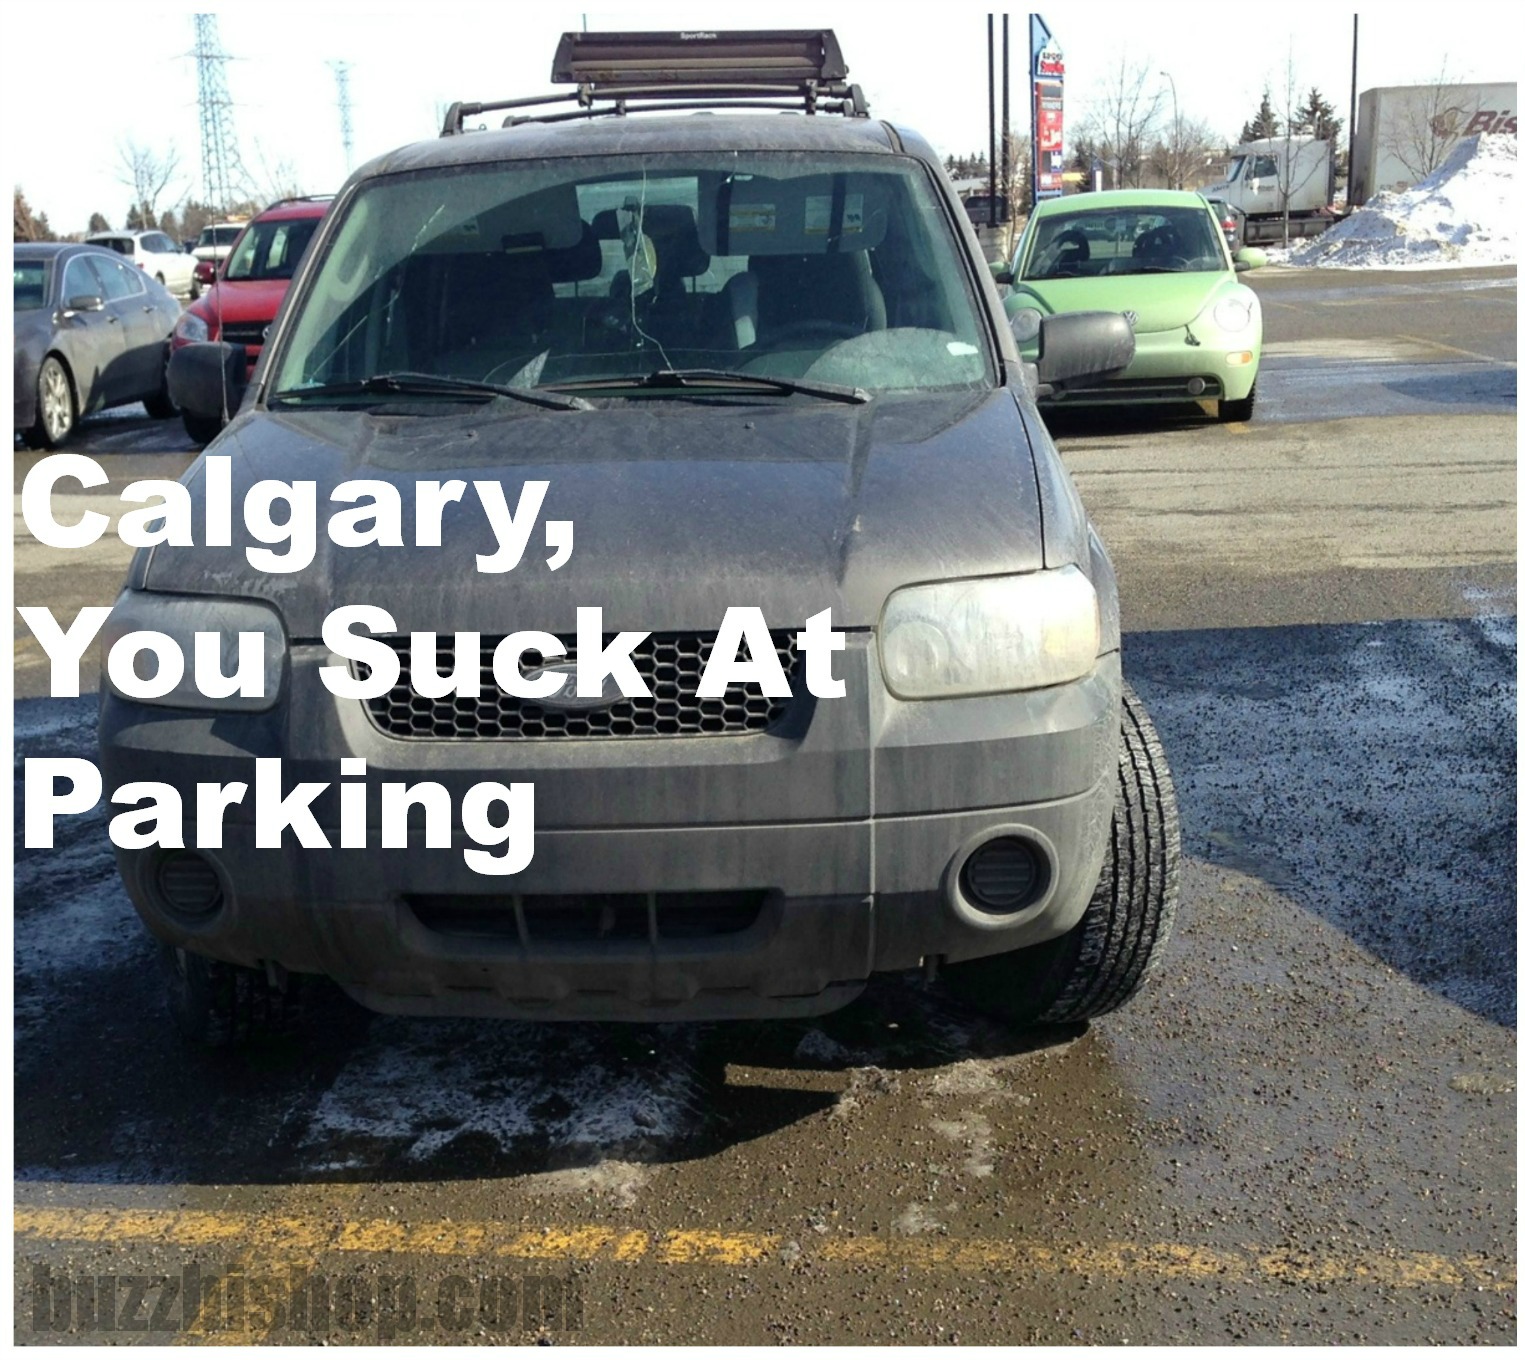 calgary you suck at parking